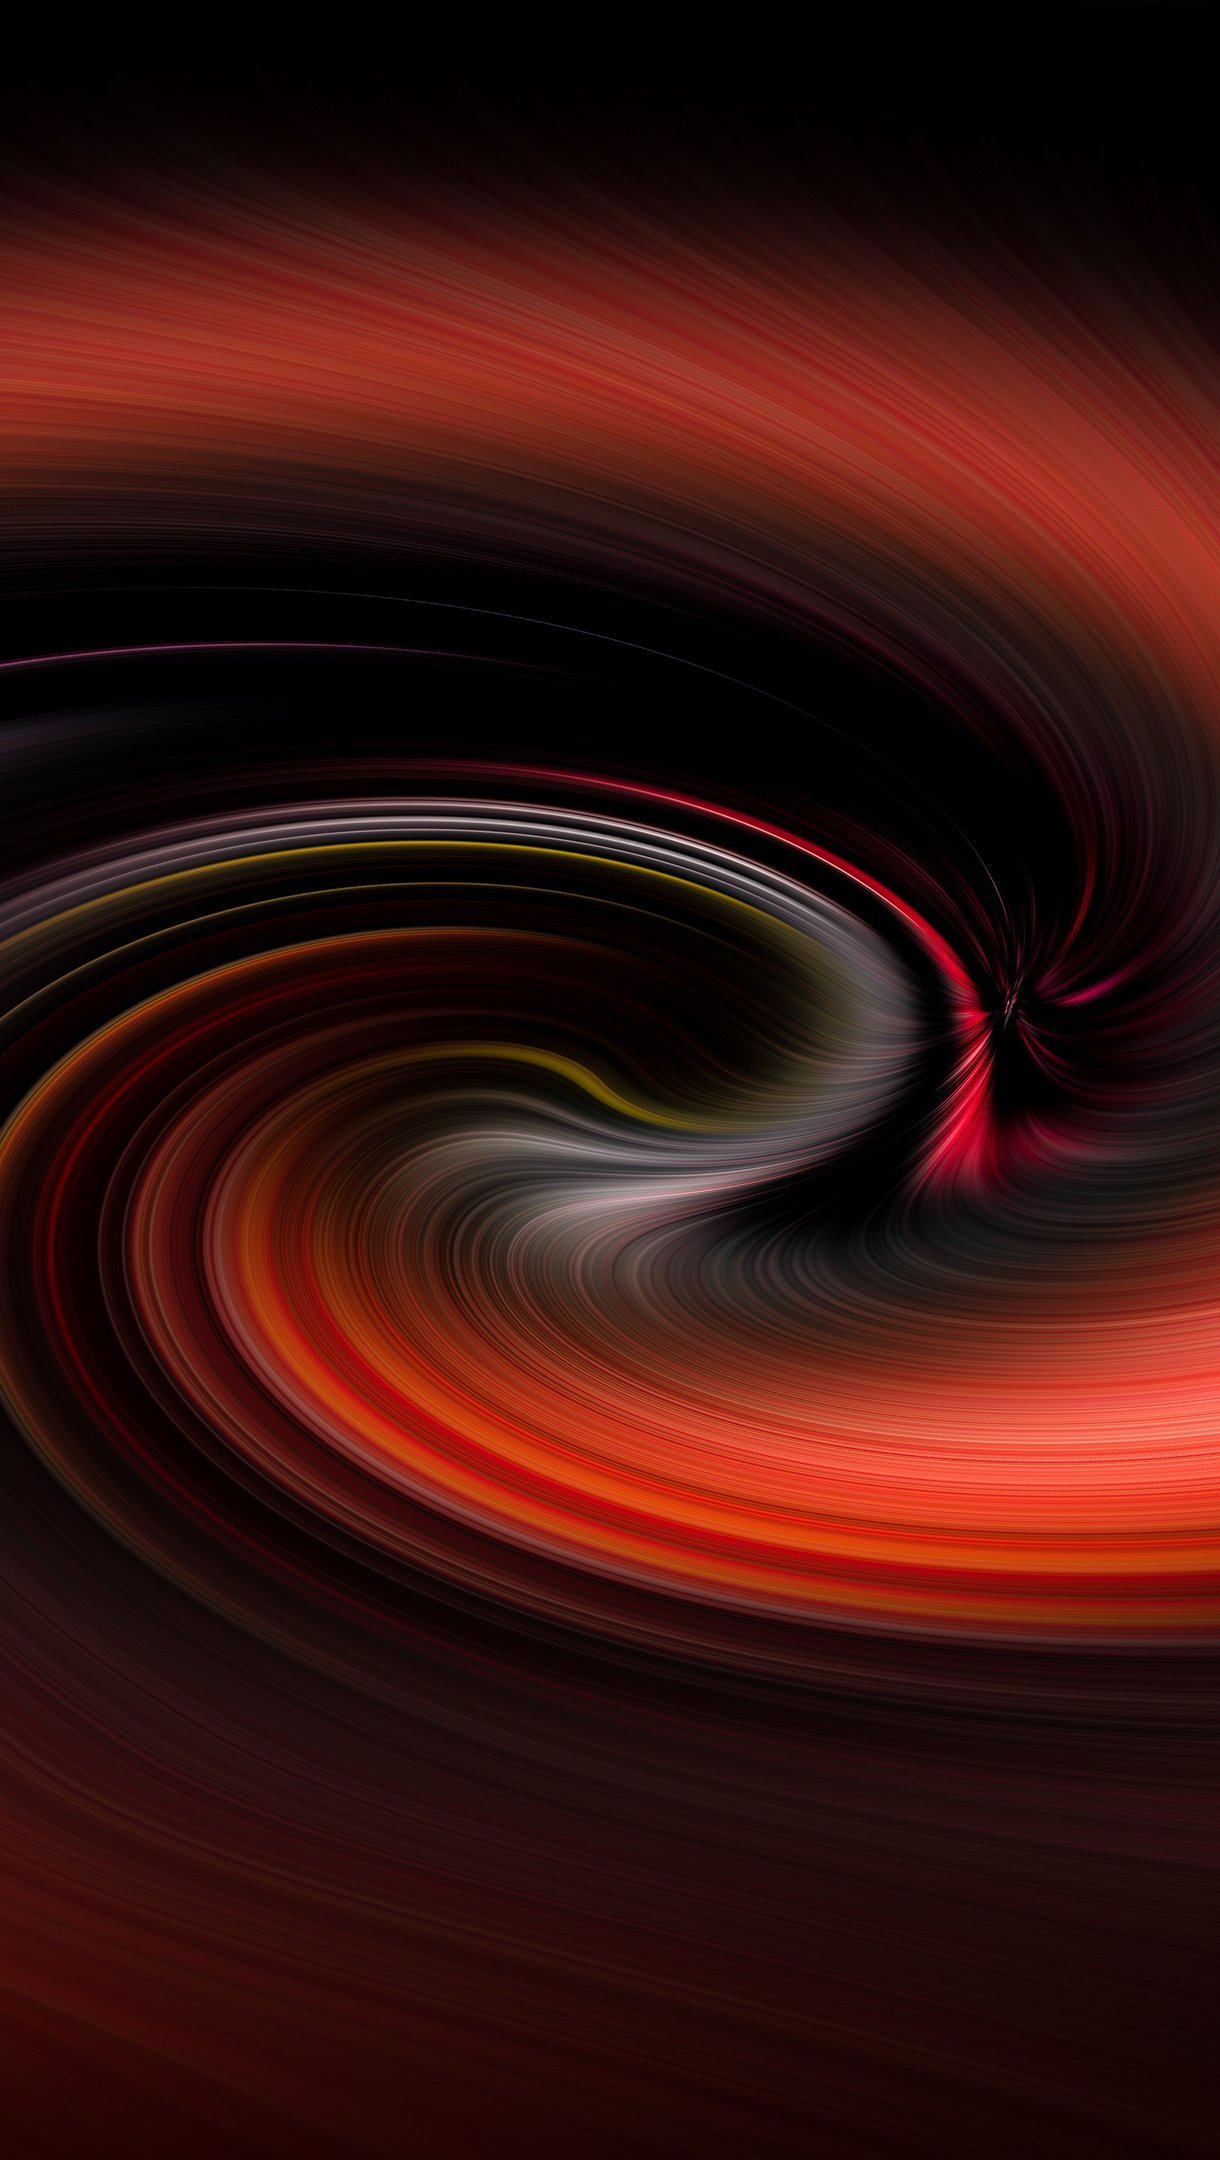 Red spiral in motion Wallpaper 4k Ultra HD ID:5985